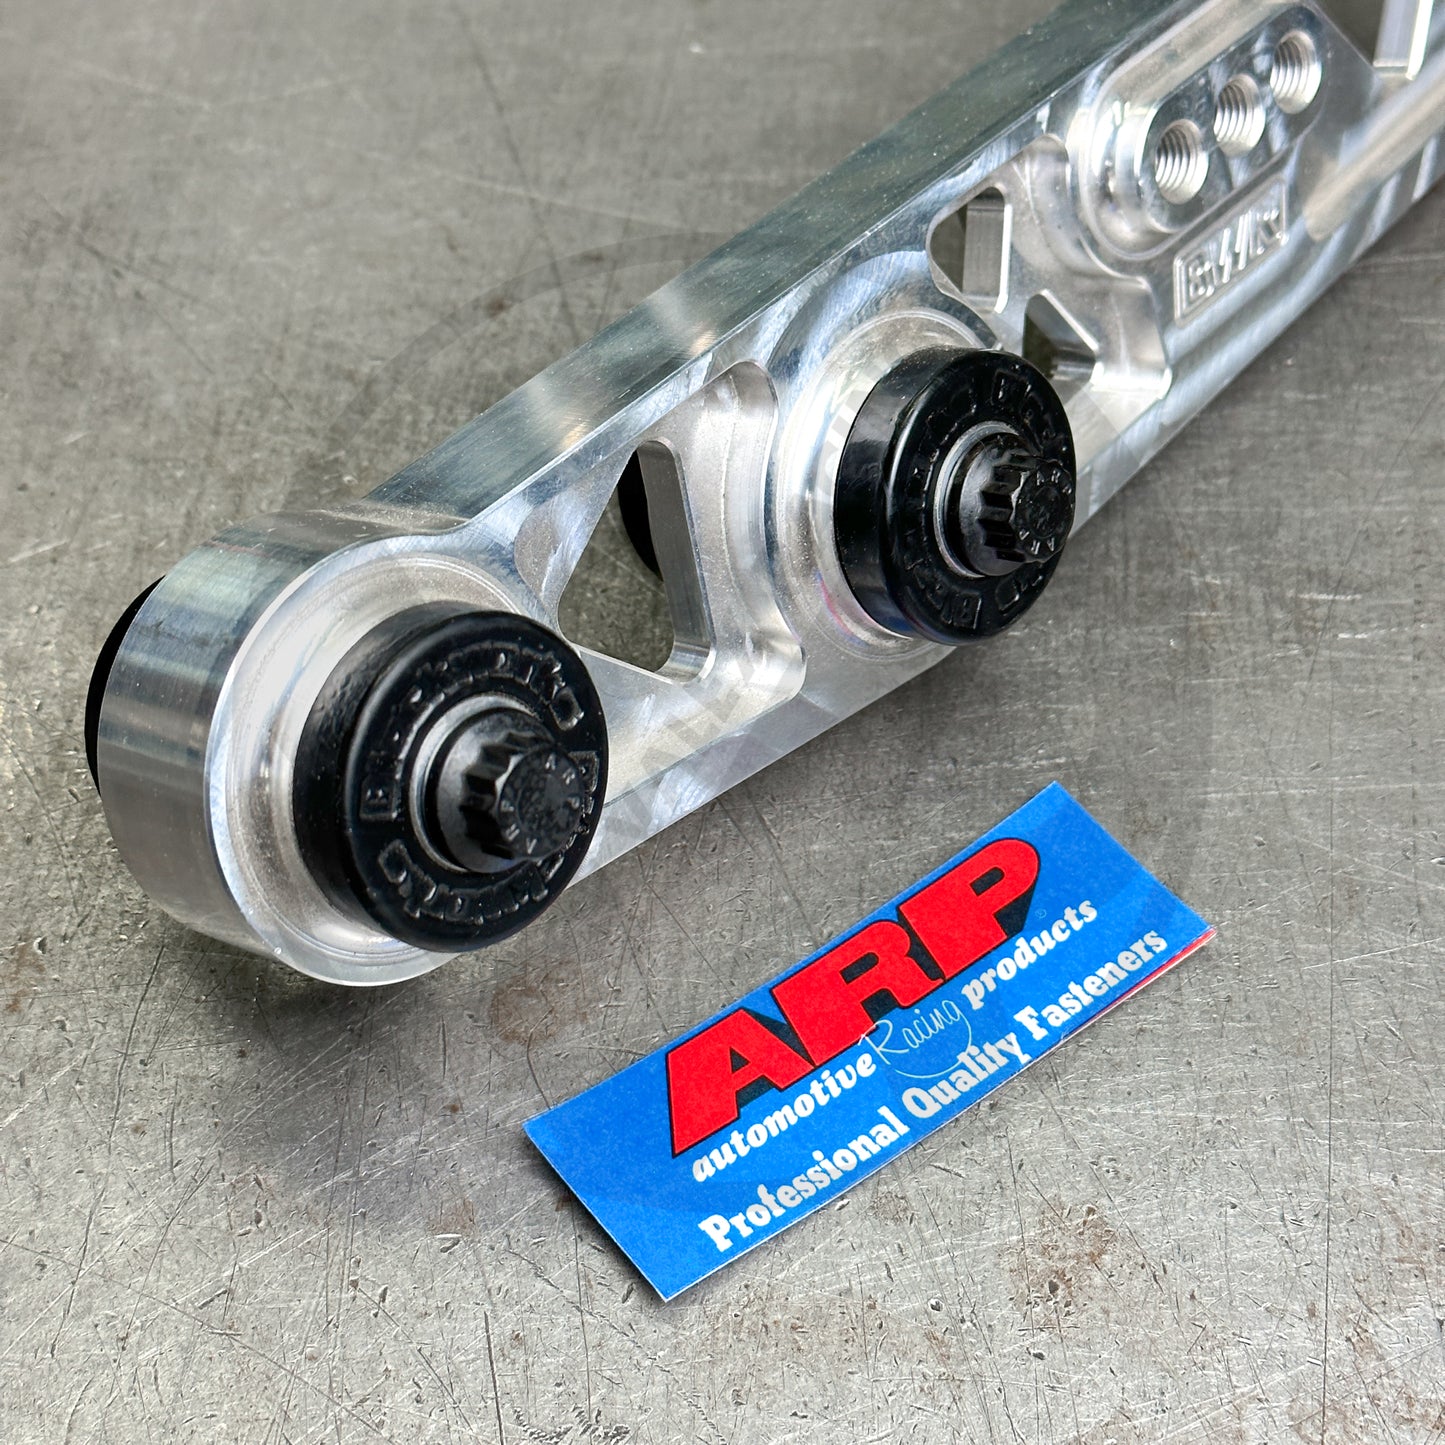 ARP Rear Lower Control Arm Bolt Kit for 88-95 Honda Civic